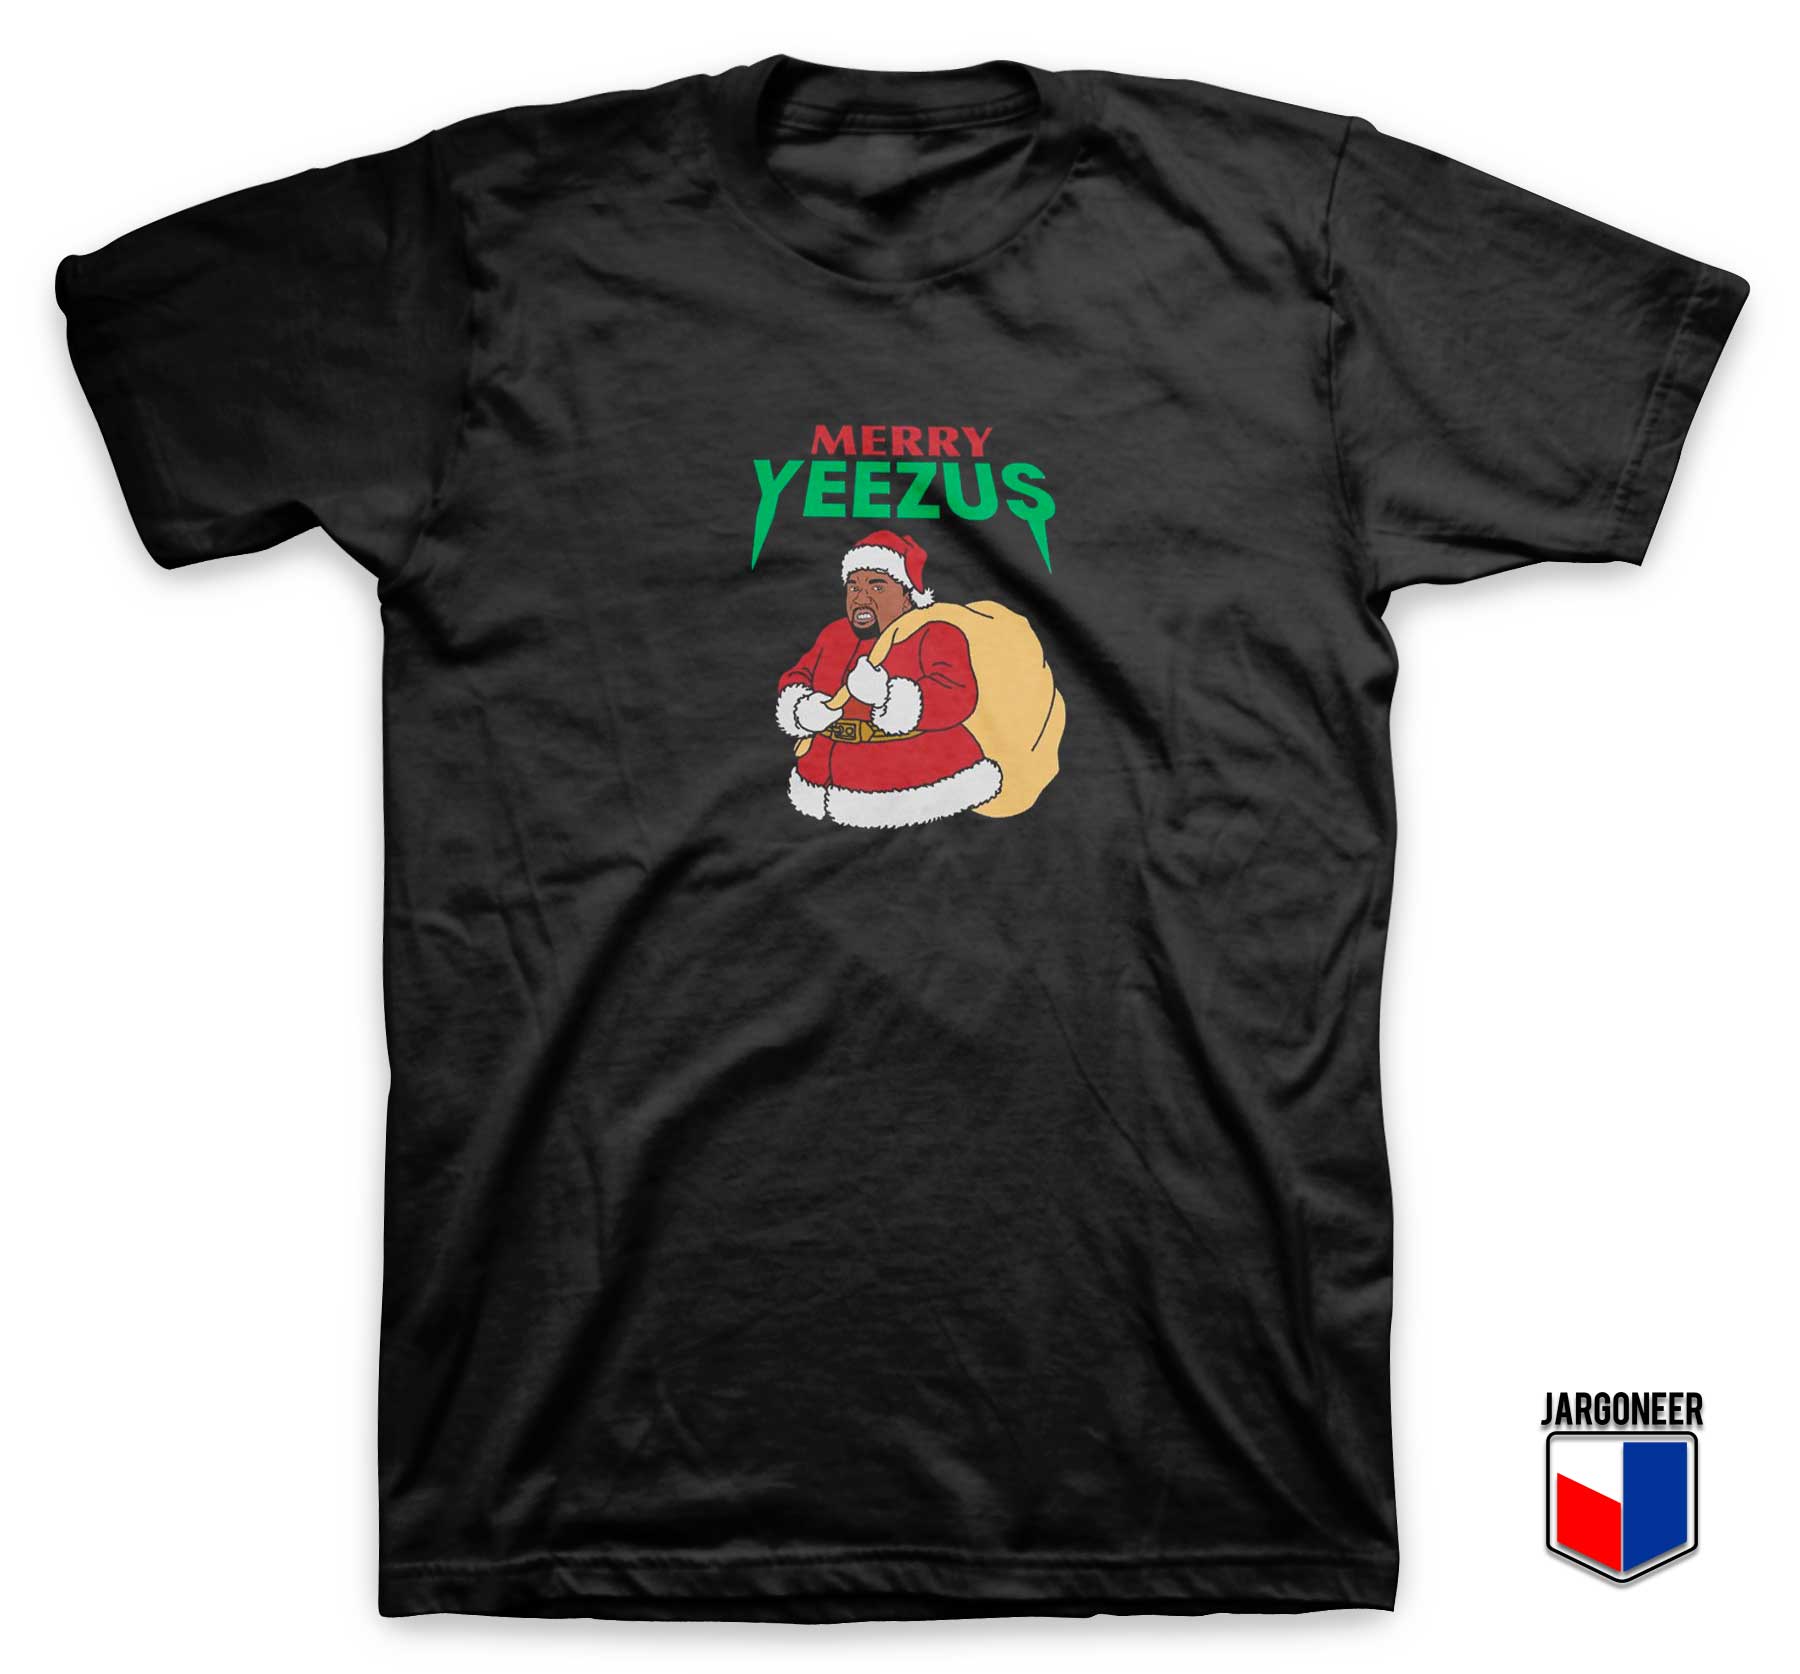 Merry Yeezus Christmas T Shirt - Shop Unique Graphic Cool Shirt Designs